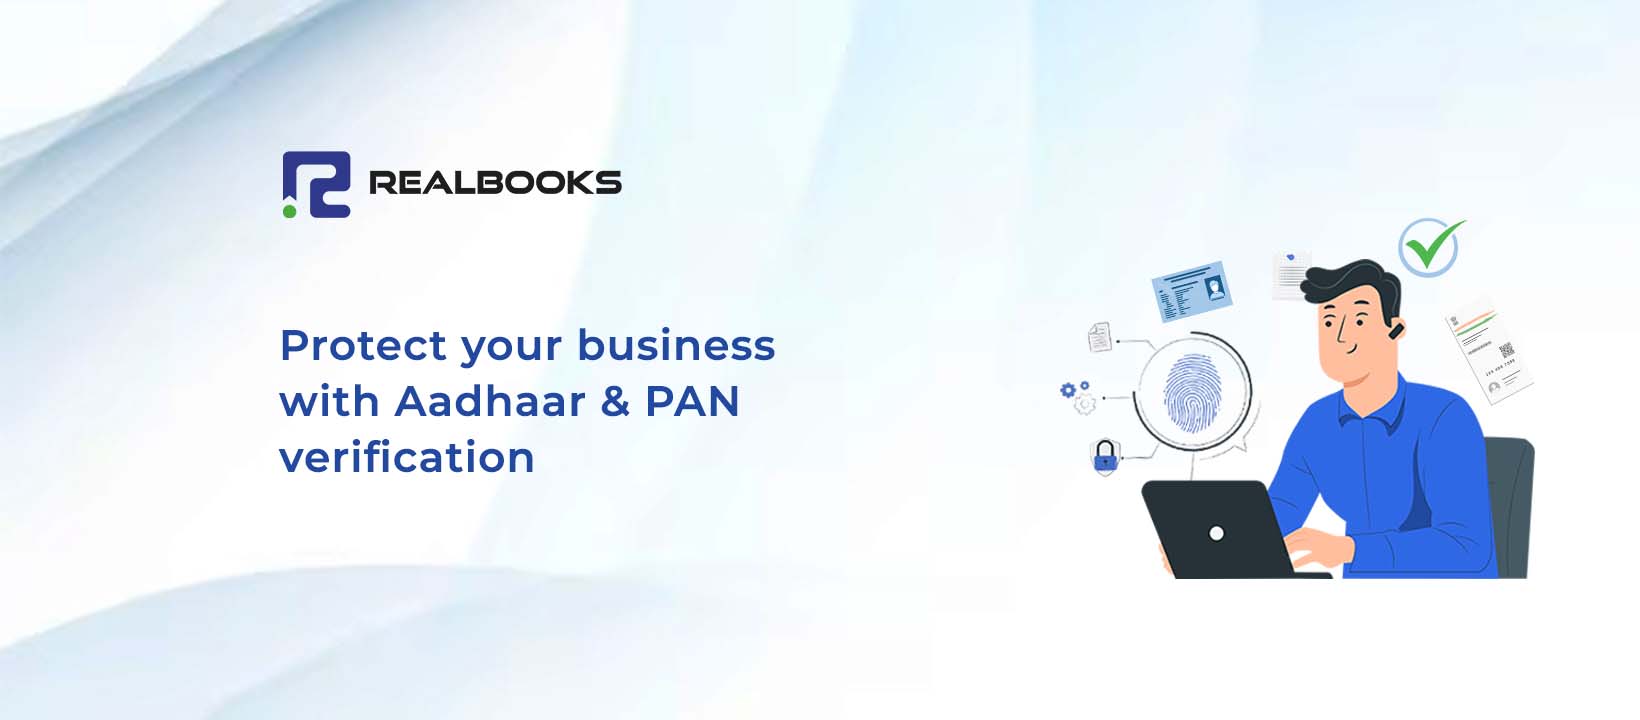 How Customer Identity Verification Protects Your Business: Aadhaar & PAN Verification